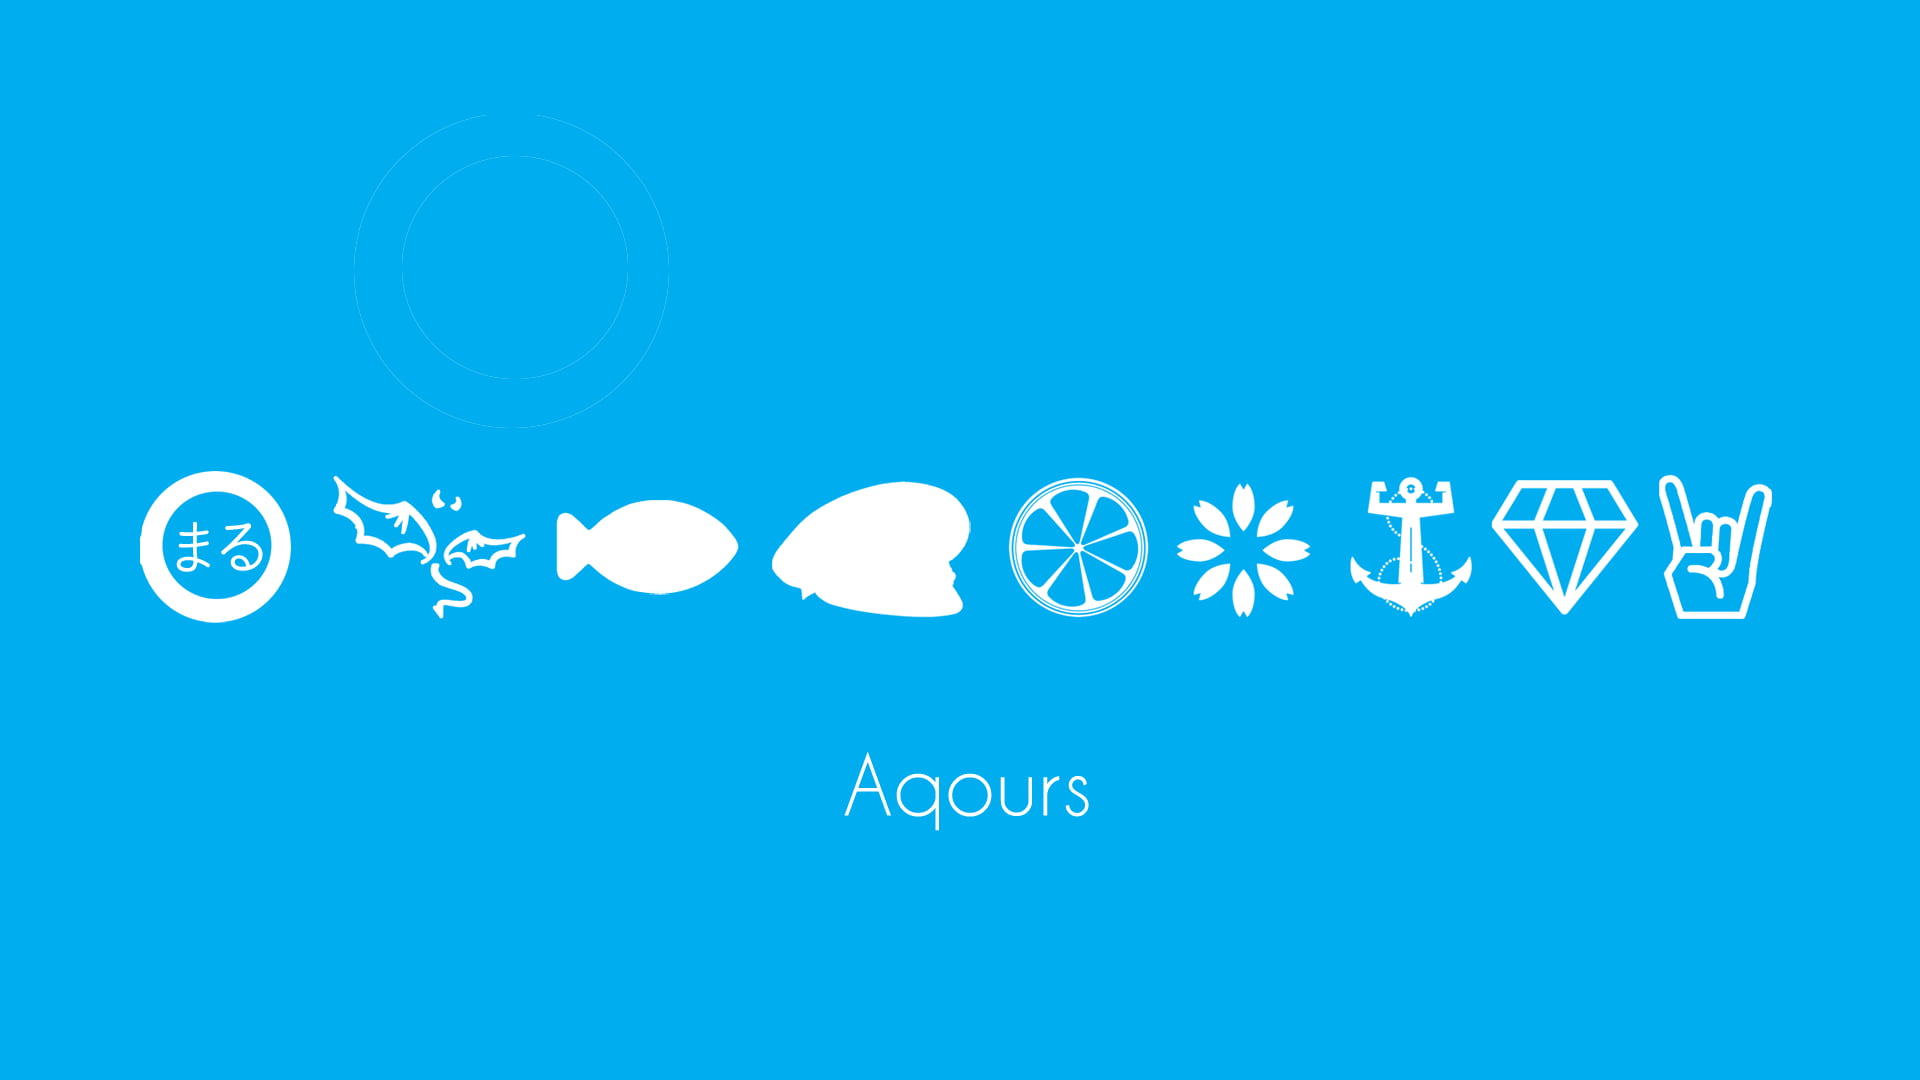 Aqours logo, Love Live! Sunshine, minimalism, blue background, artwork